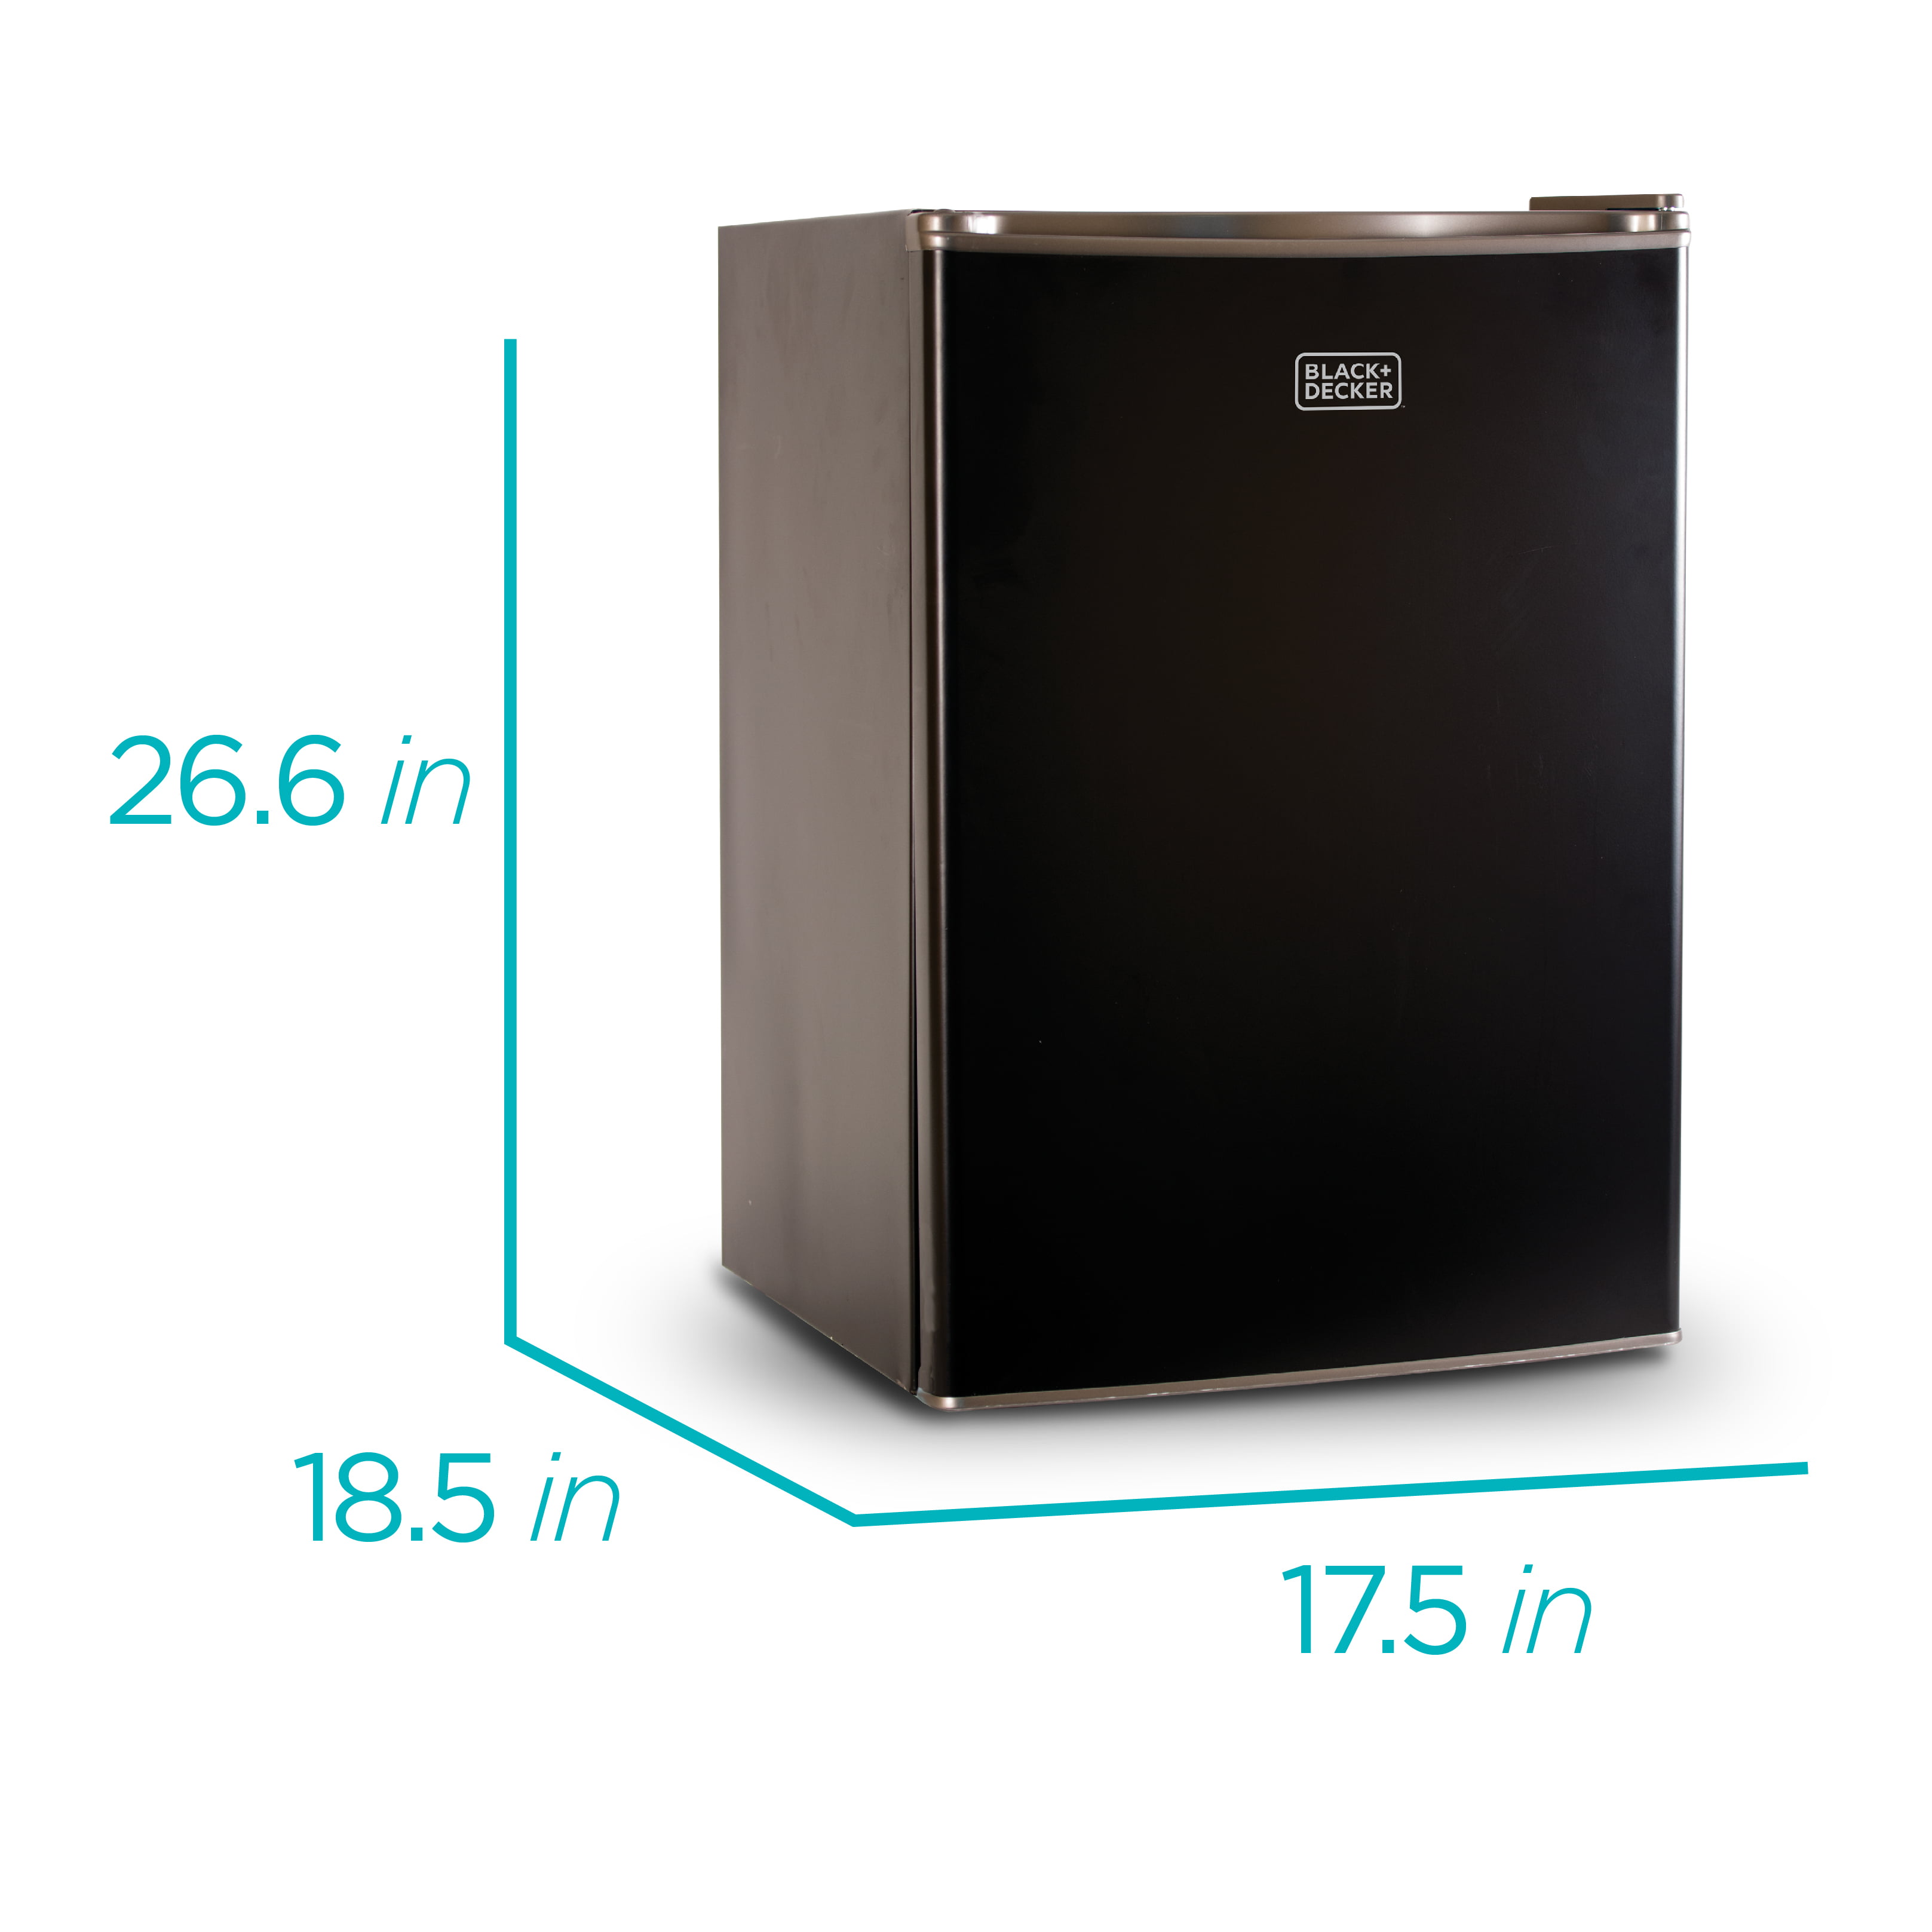 Black & Decker™ Compact Refrigerator/Freezer